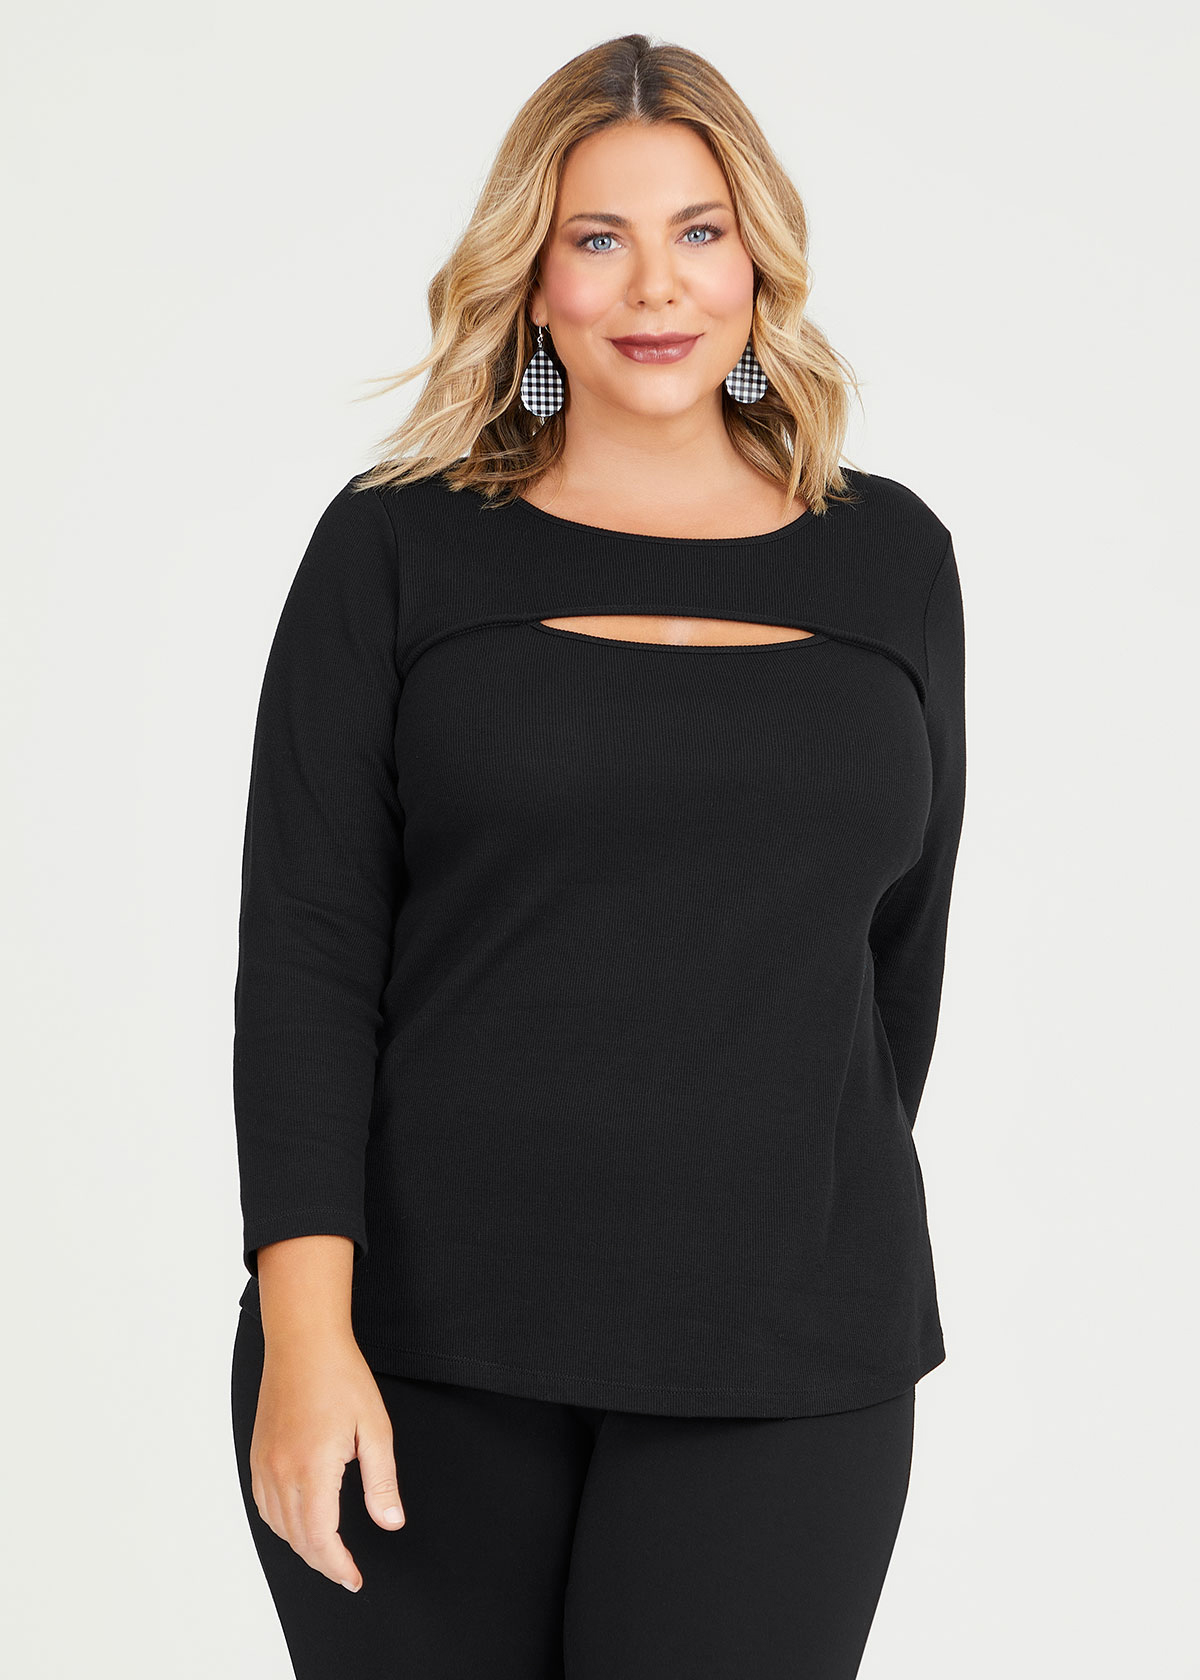 Shop Plus Size Cotton Kiara Long Slv Top in Black | Taking Shape AU